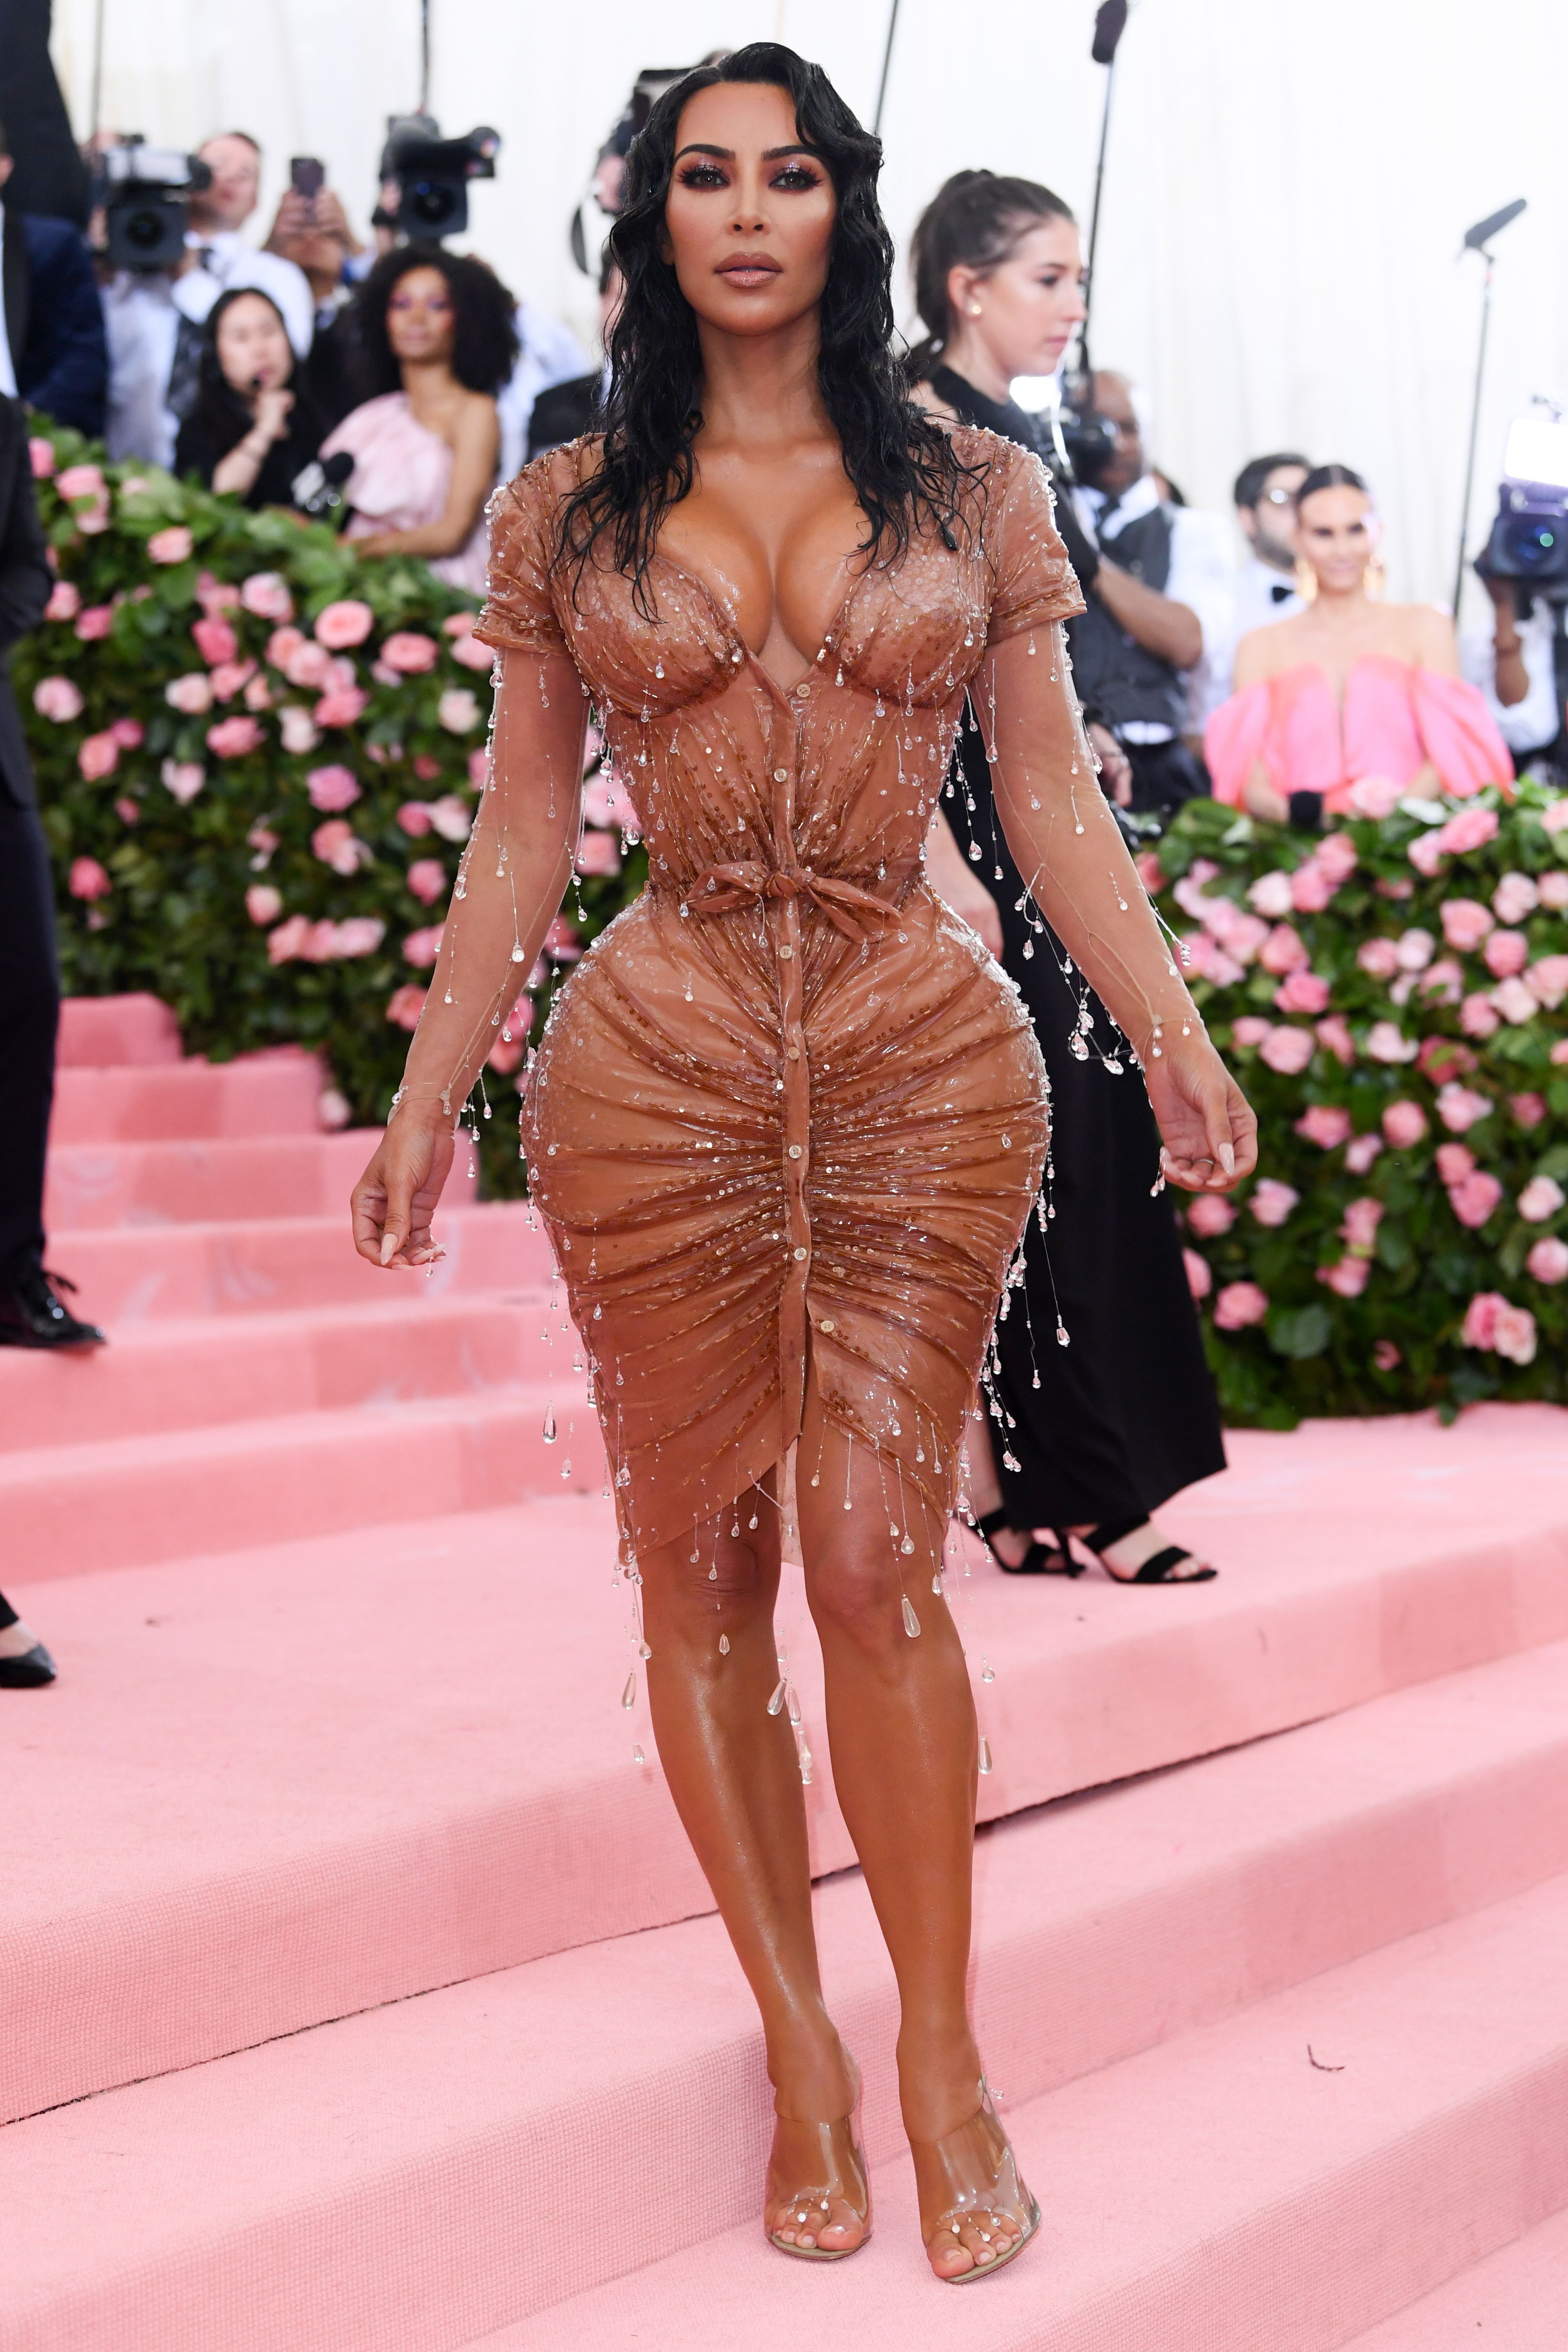 Kim Kardashian best fashion style looks over the years